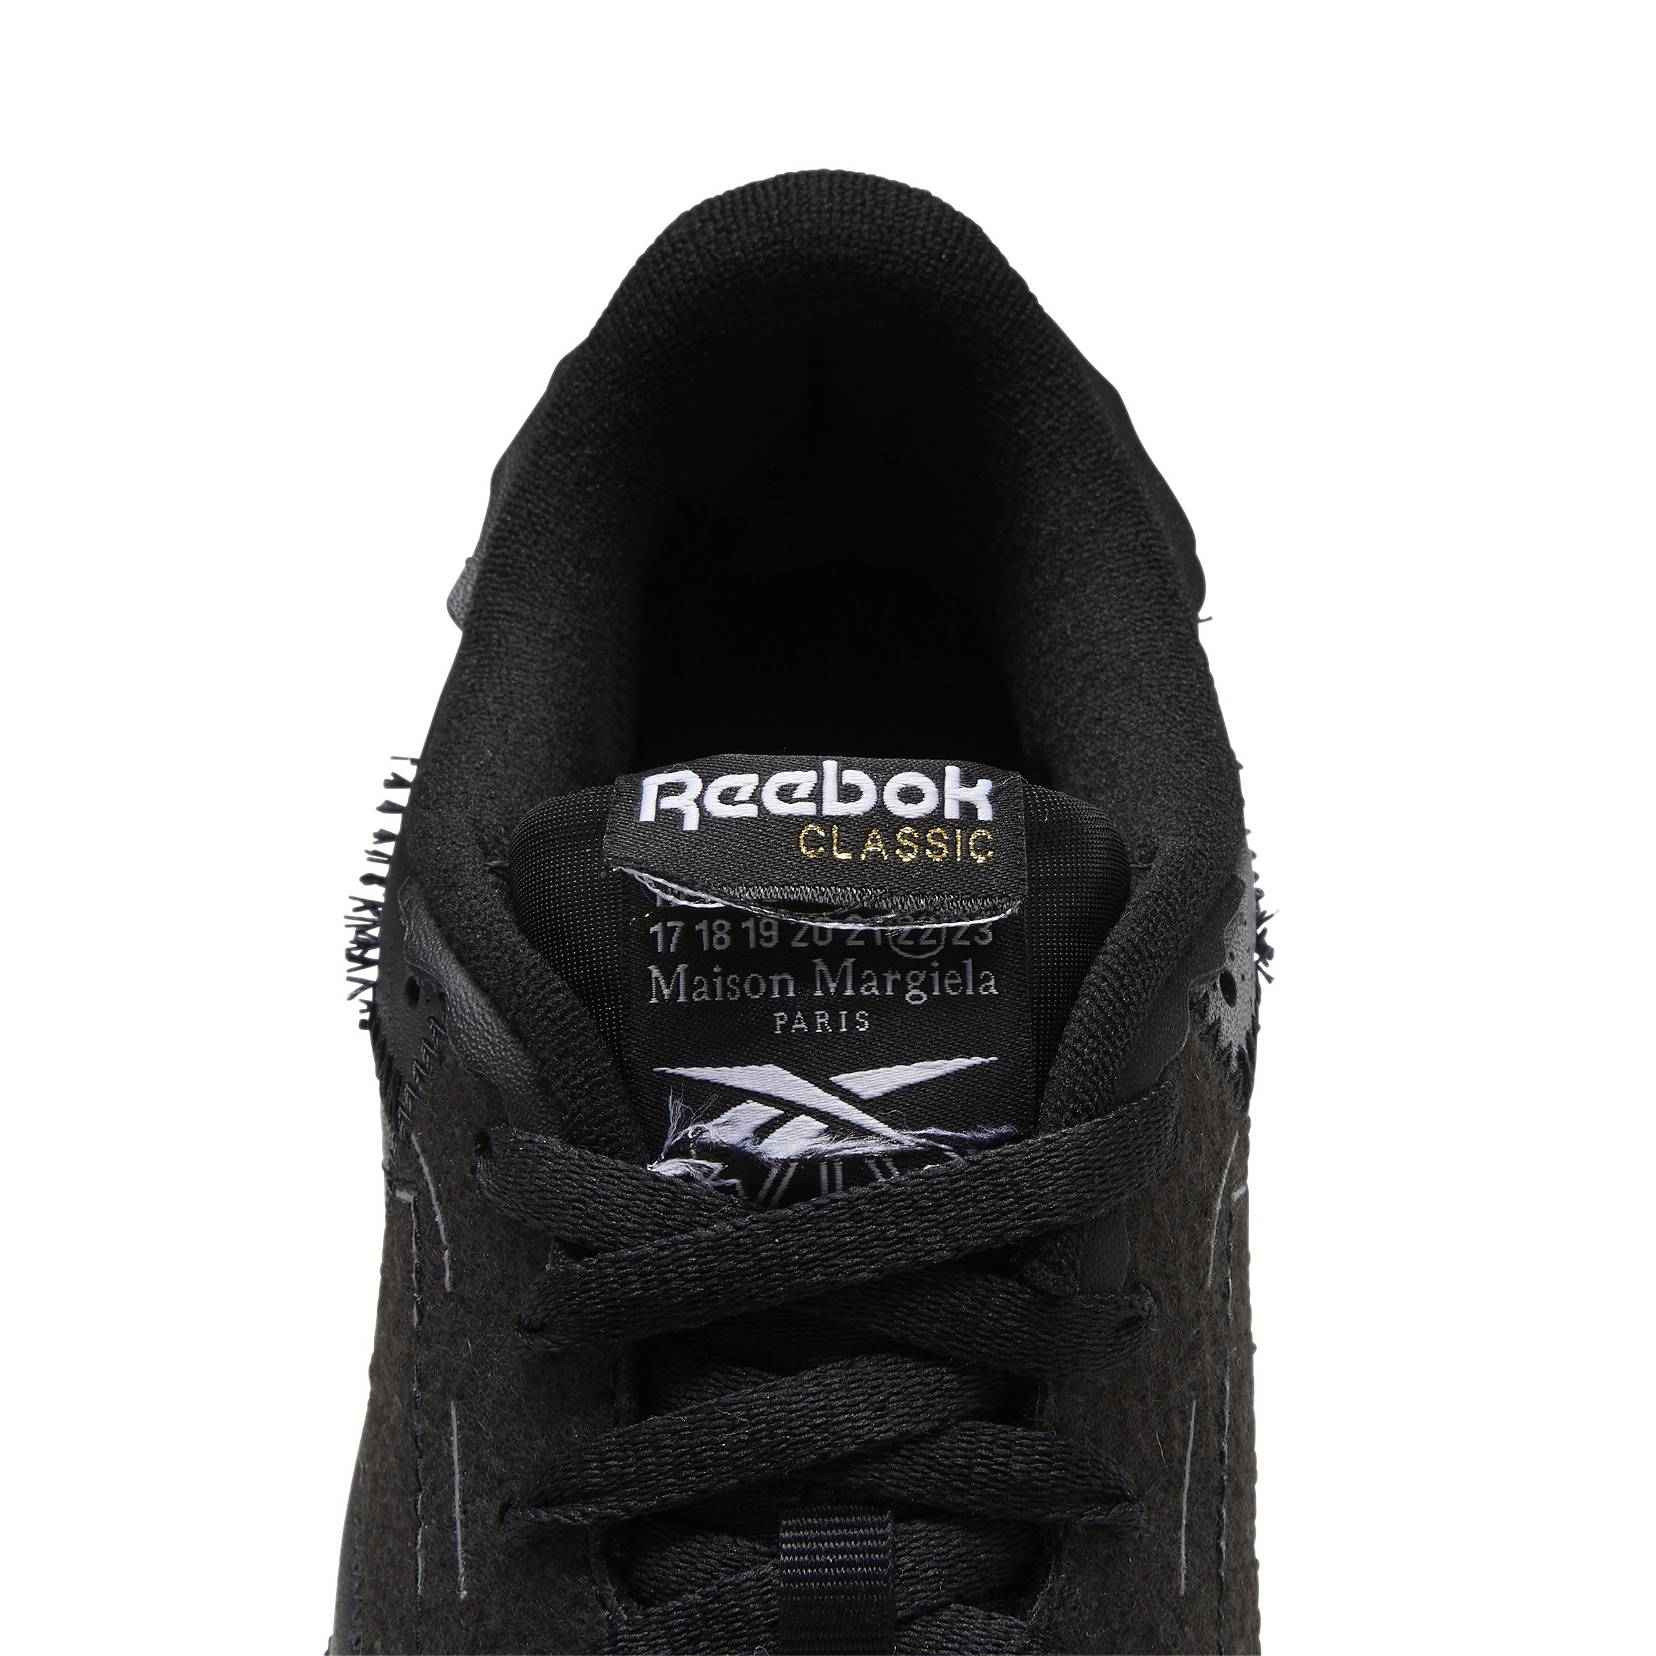 Maison Margiela x Reebok – Classic Leather Memory Of Black/Footwear  White/Black